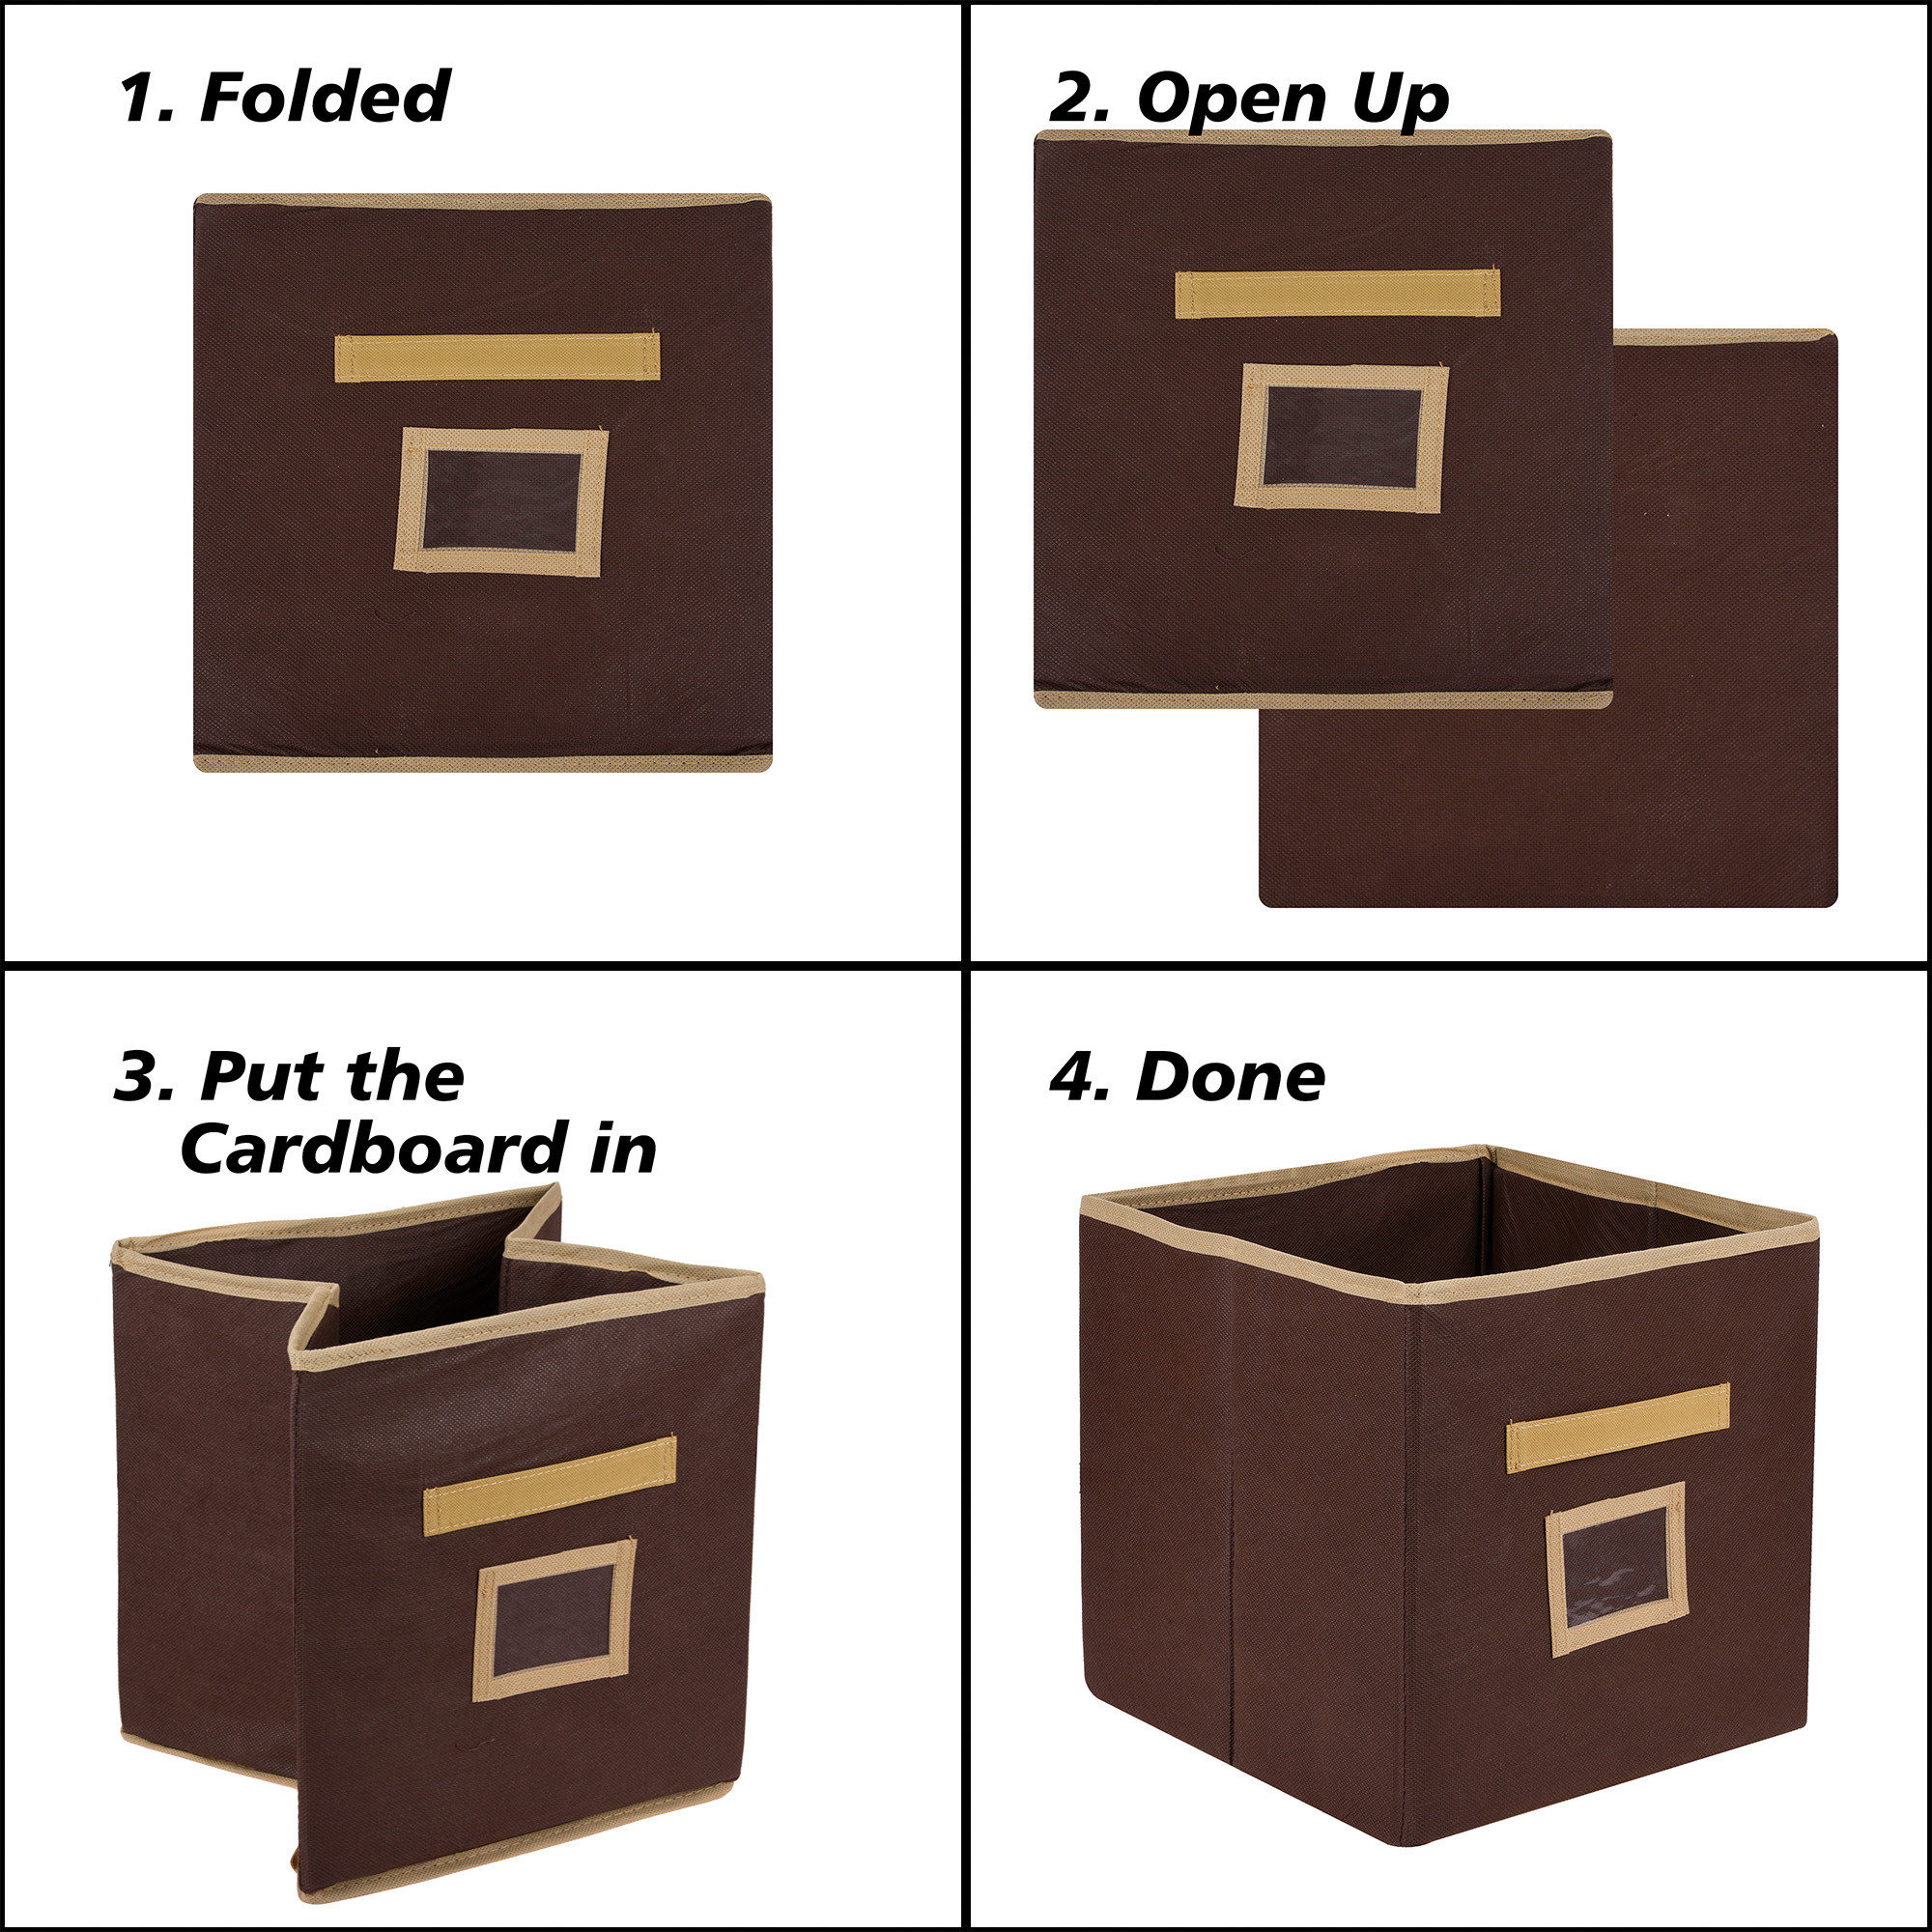 Kuber Industries Storage Box | Square Toy Storage Box | Wardrobe Organizer for Clothes-Books-Toys-Stationary | Drawer Organizer Box with Handle & Name Pocket | Black & Brown